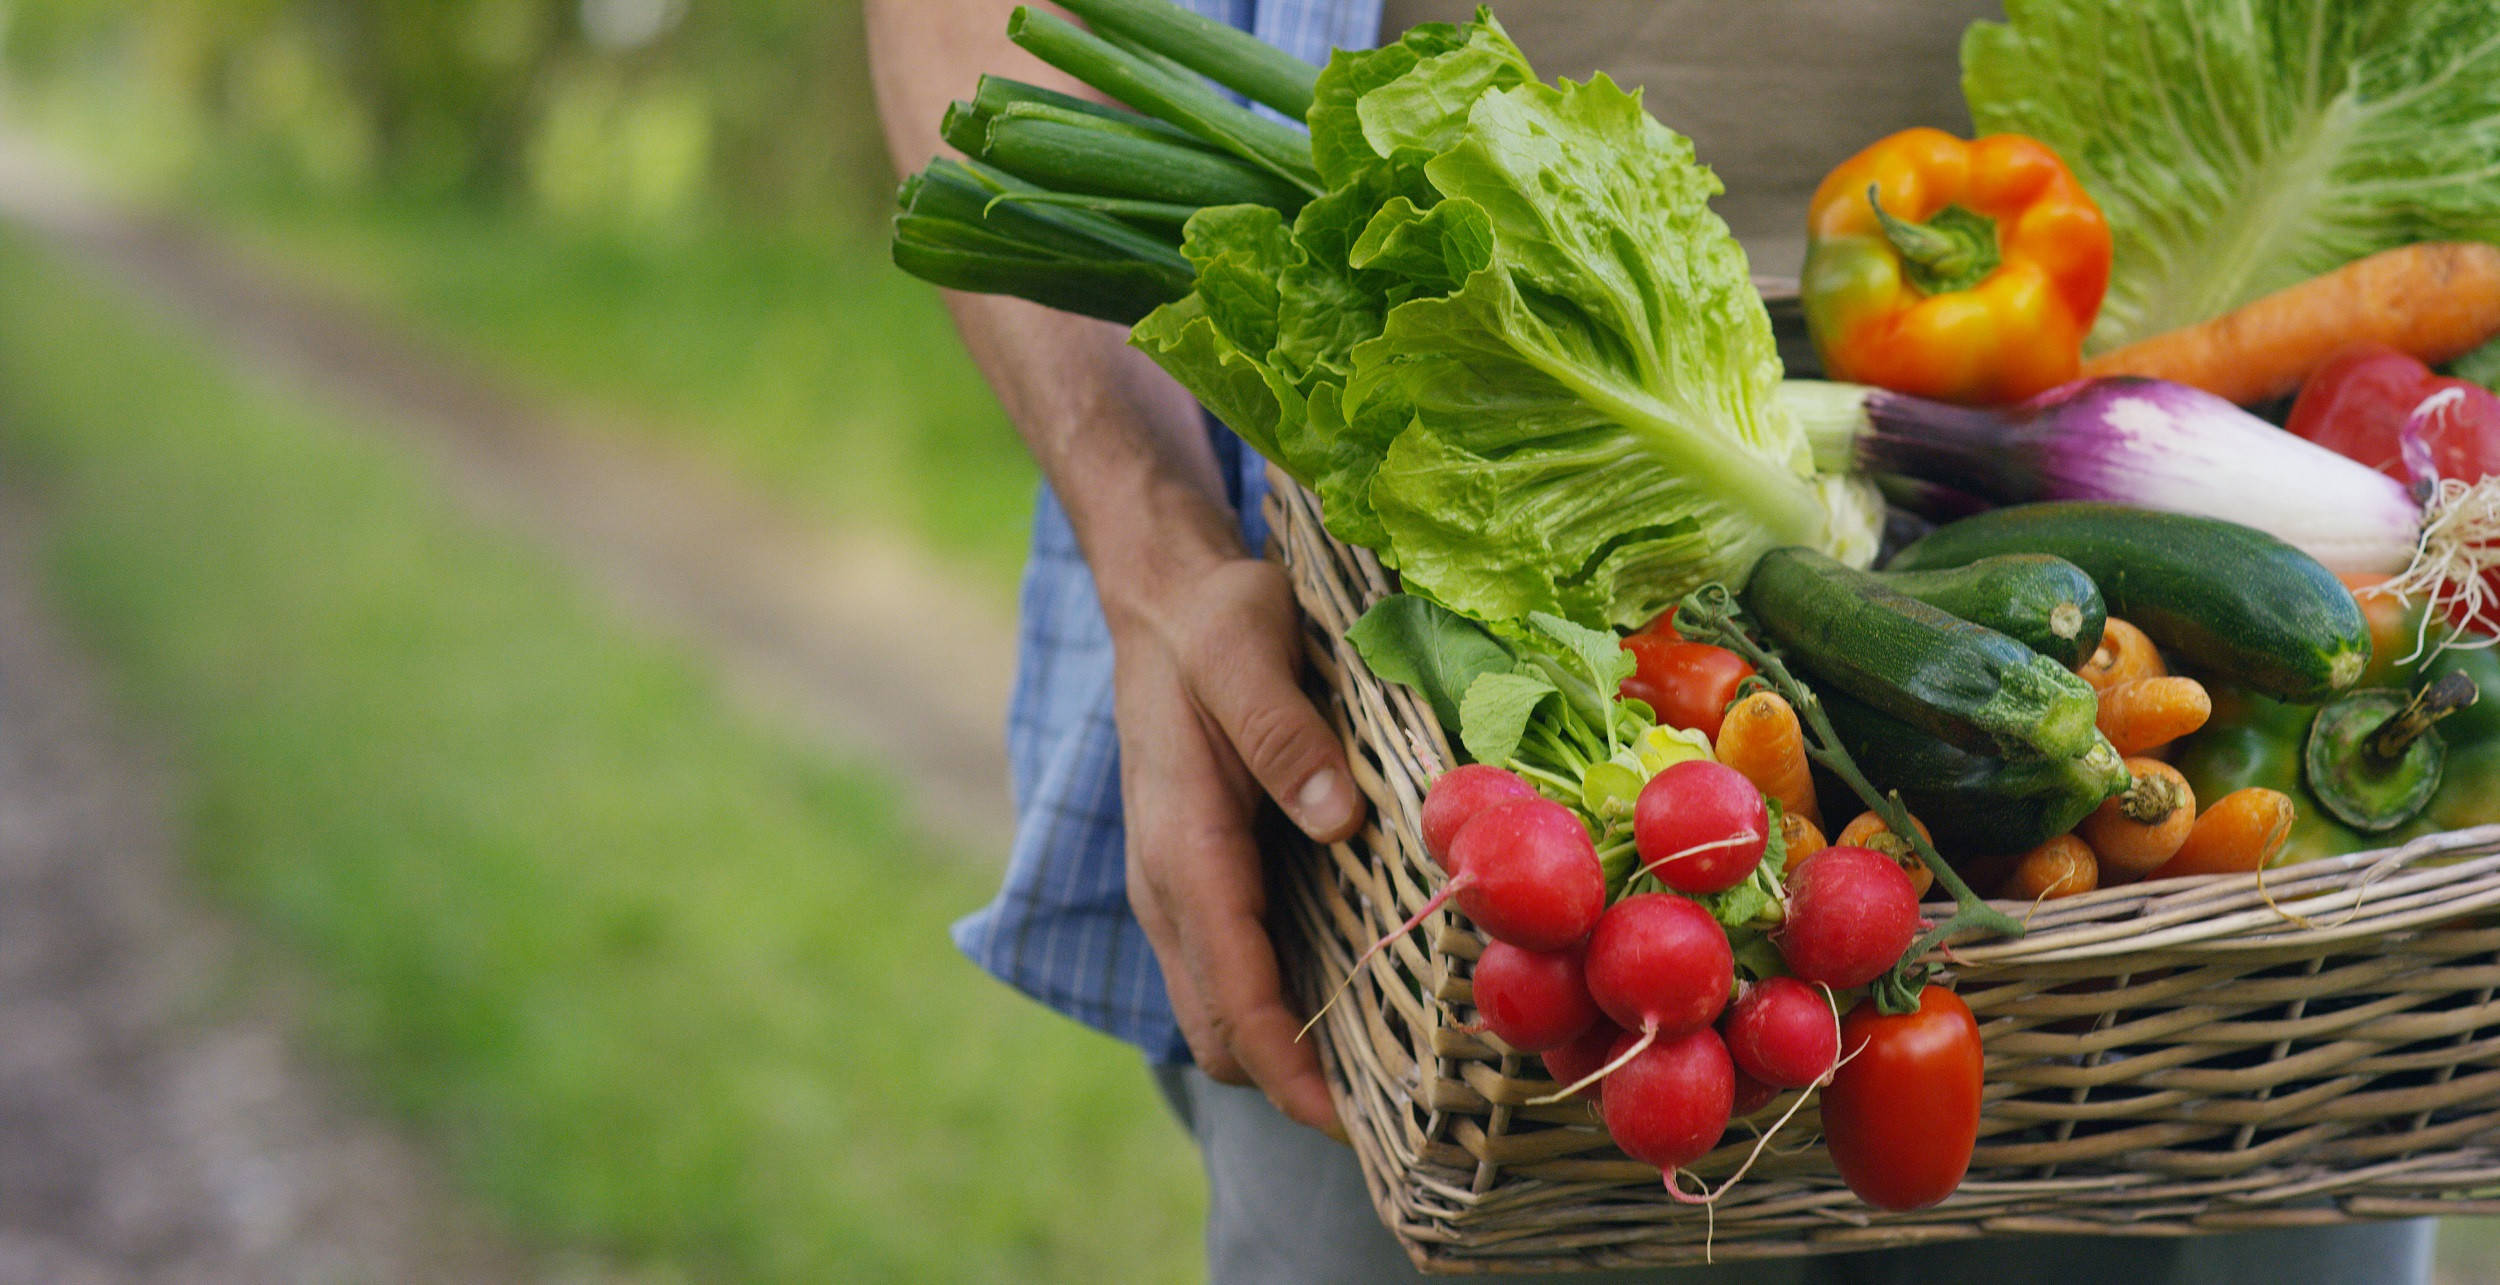 Productos de agricultura ecológica. Foto:Shutterstock